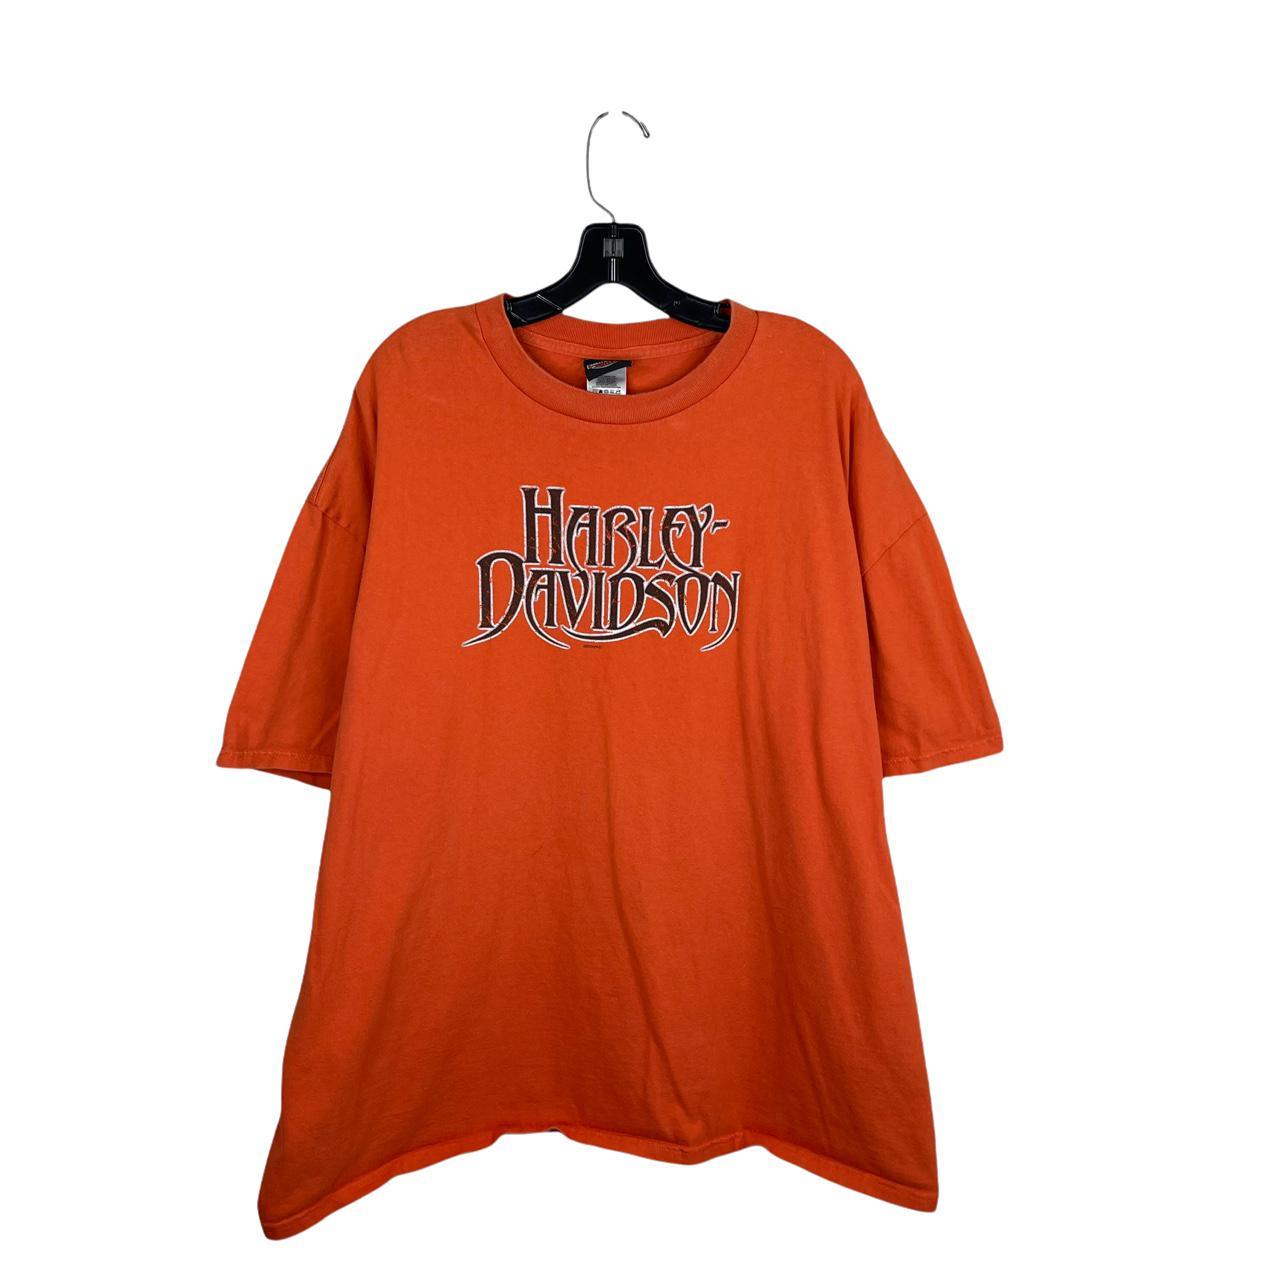 Harley Davidson Men's Orange T-shirt